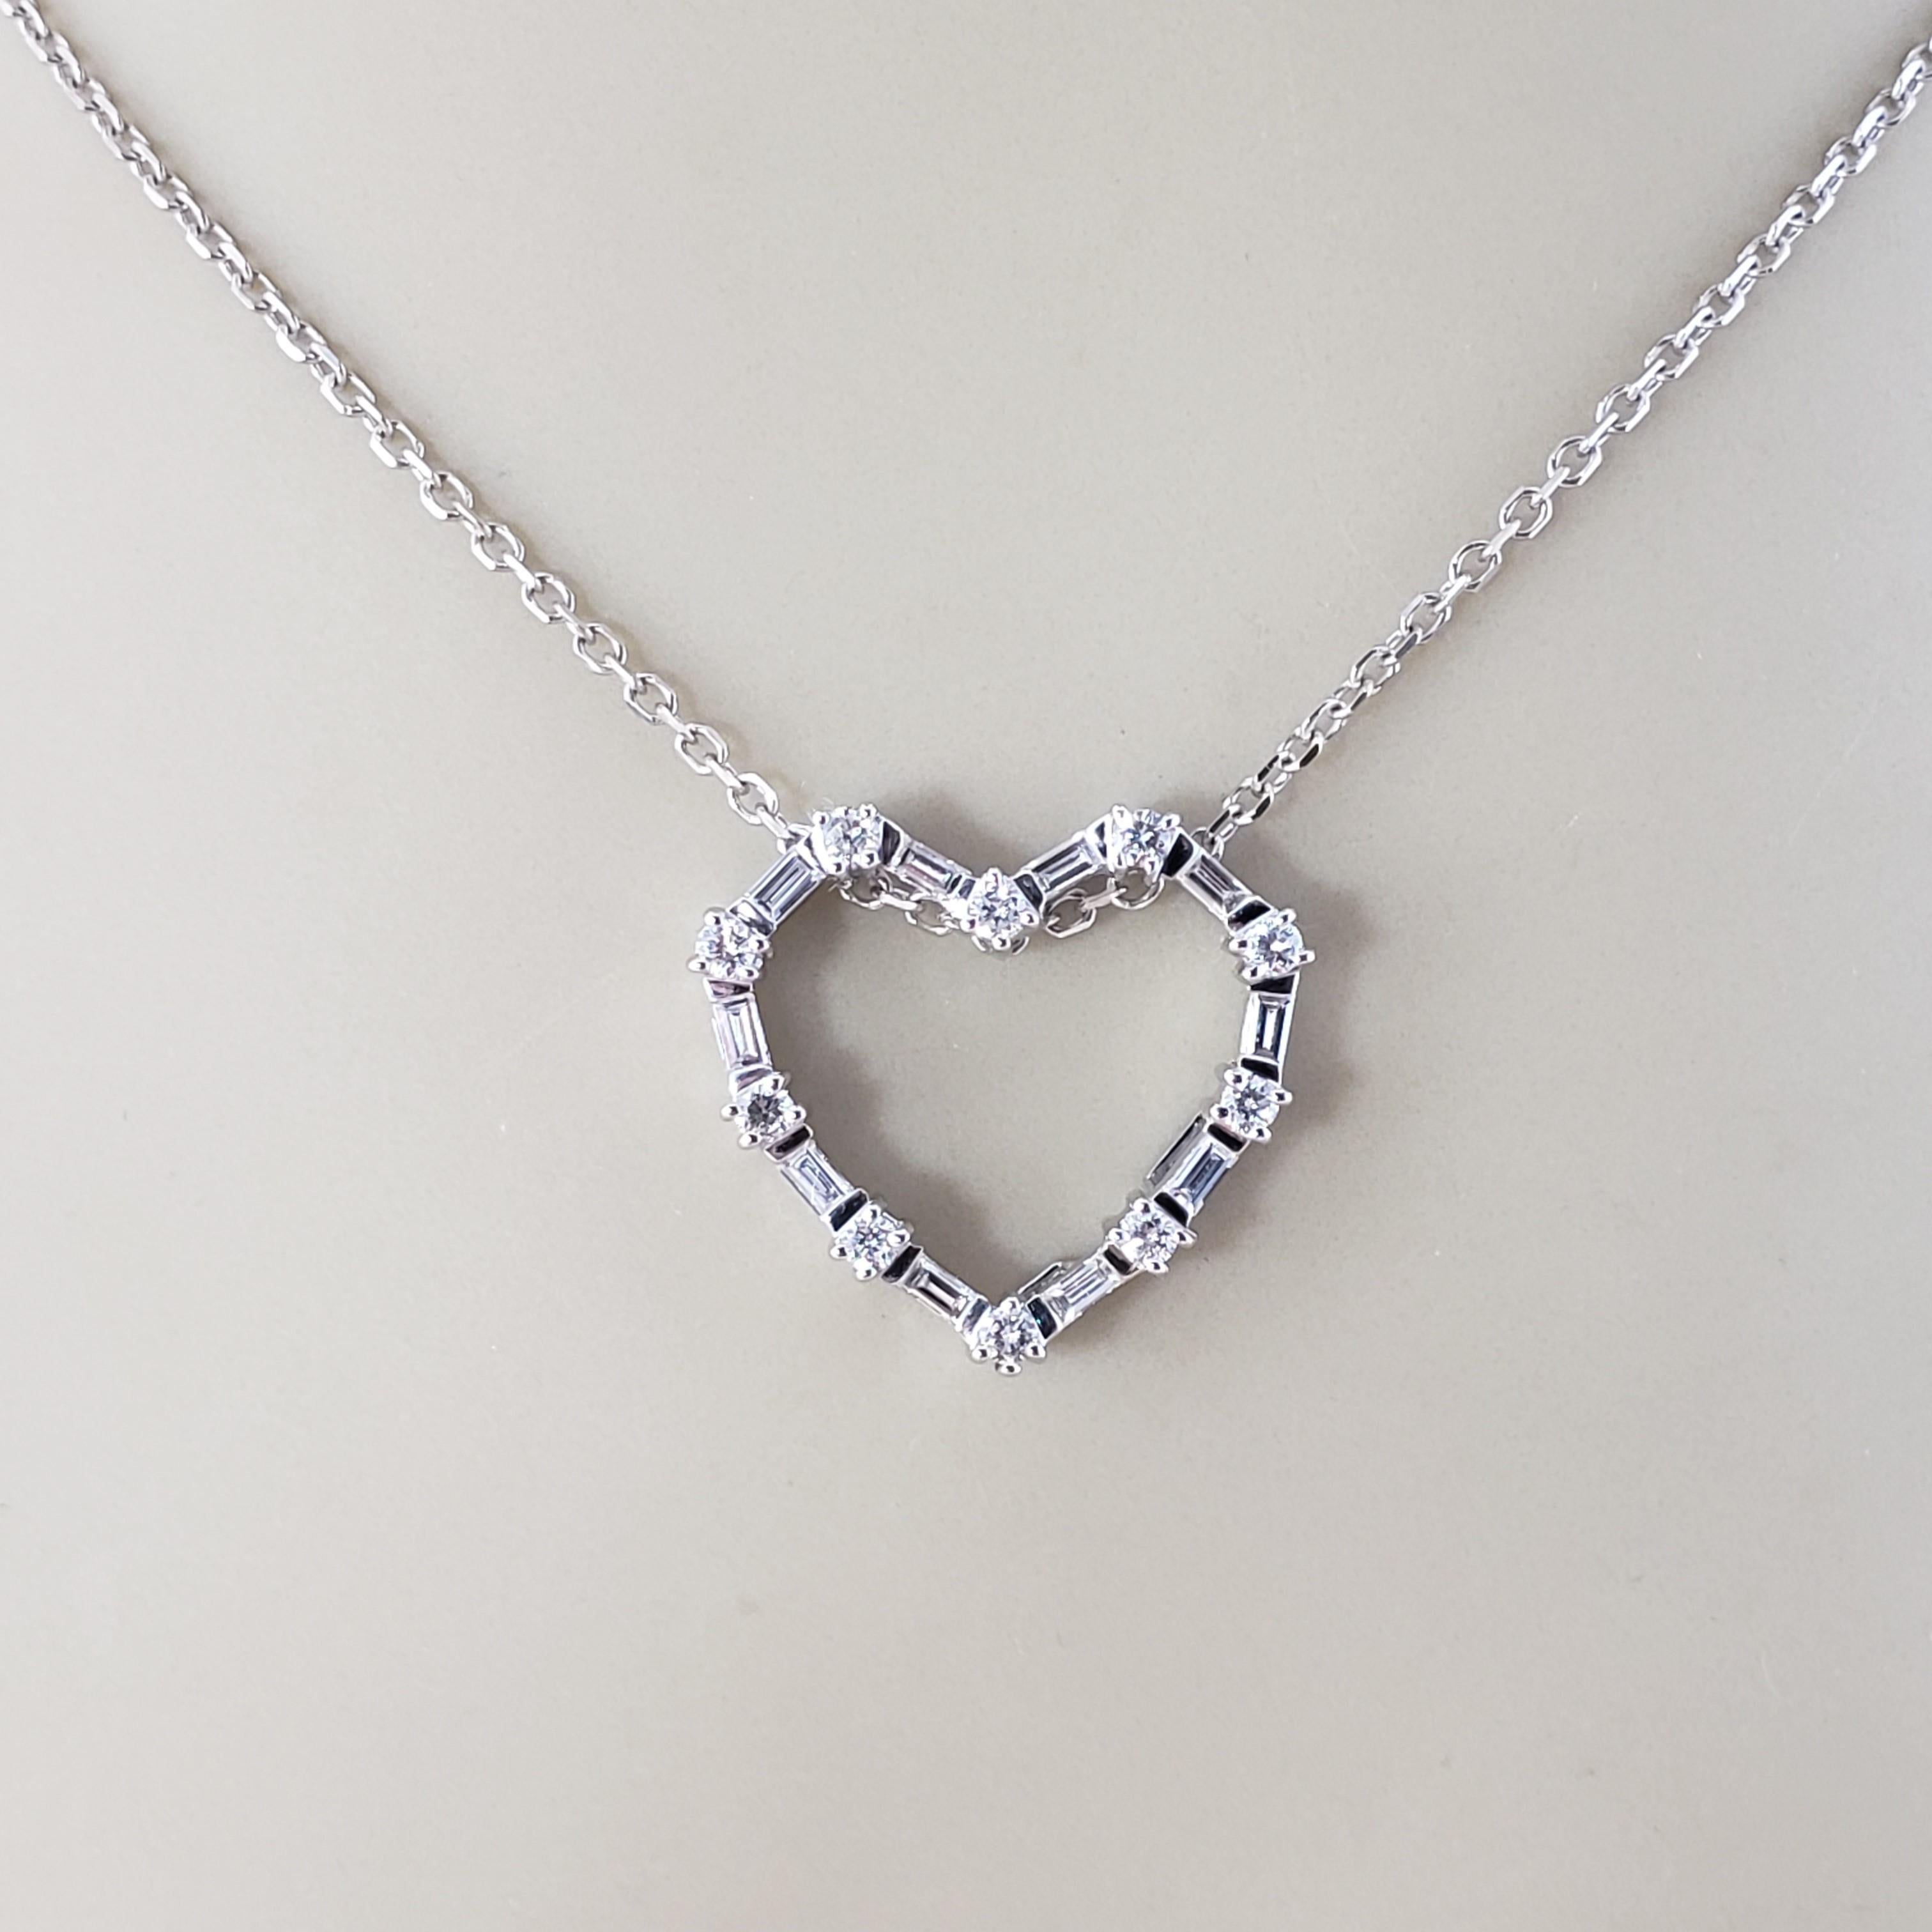  14/18 Karat White Gold Diamond Heart Pendant Necklace #15574 For Sale 3